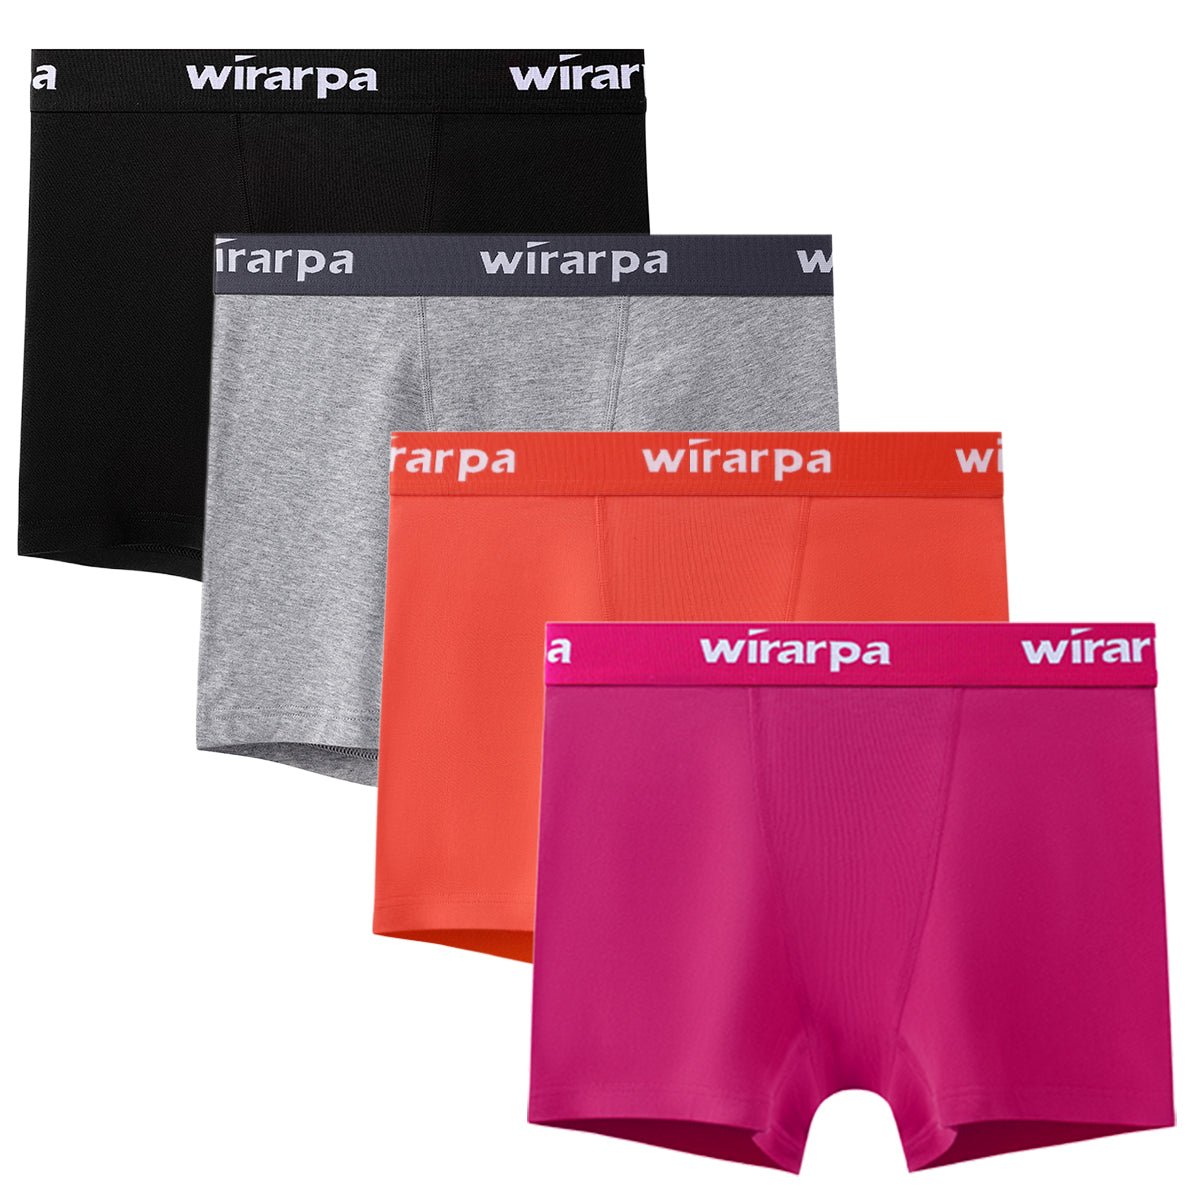 wirarpa Women's Cotton Boxer Briefs Anti-Chafing Boyshorts Panties